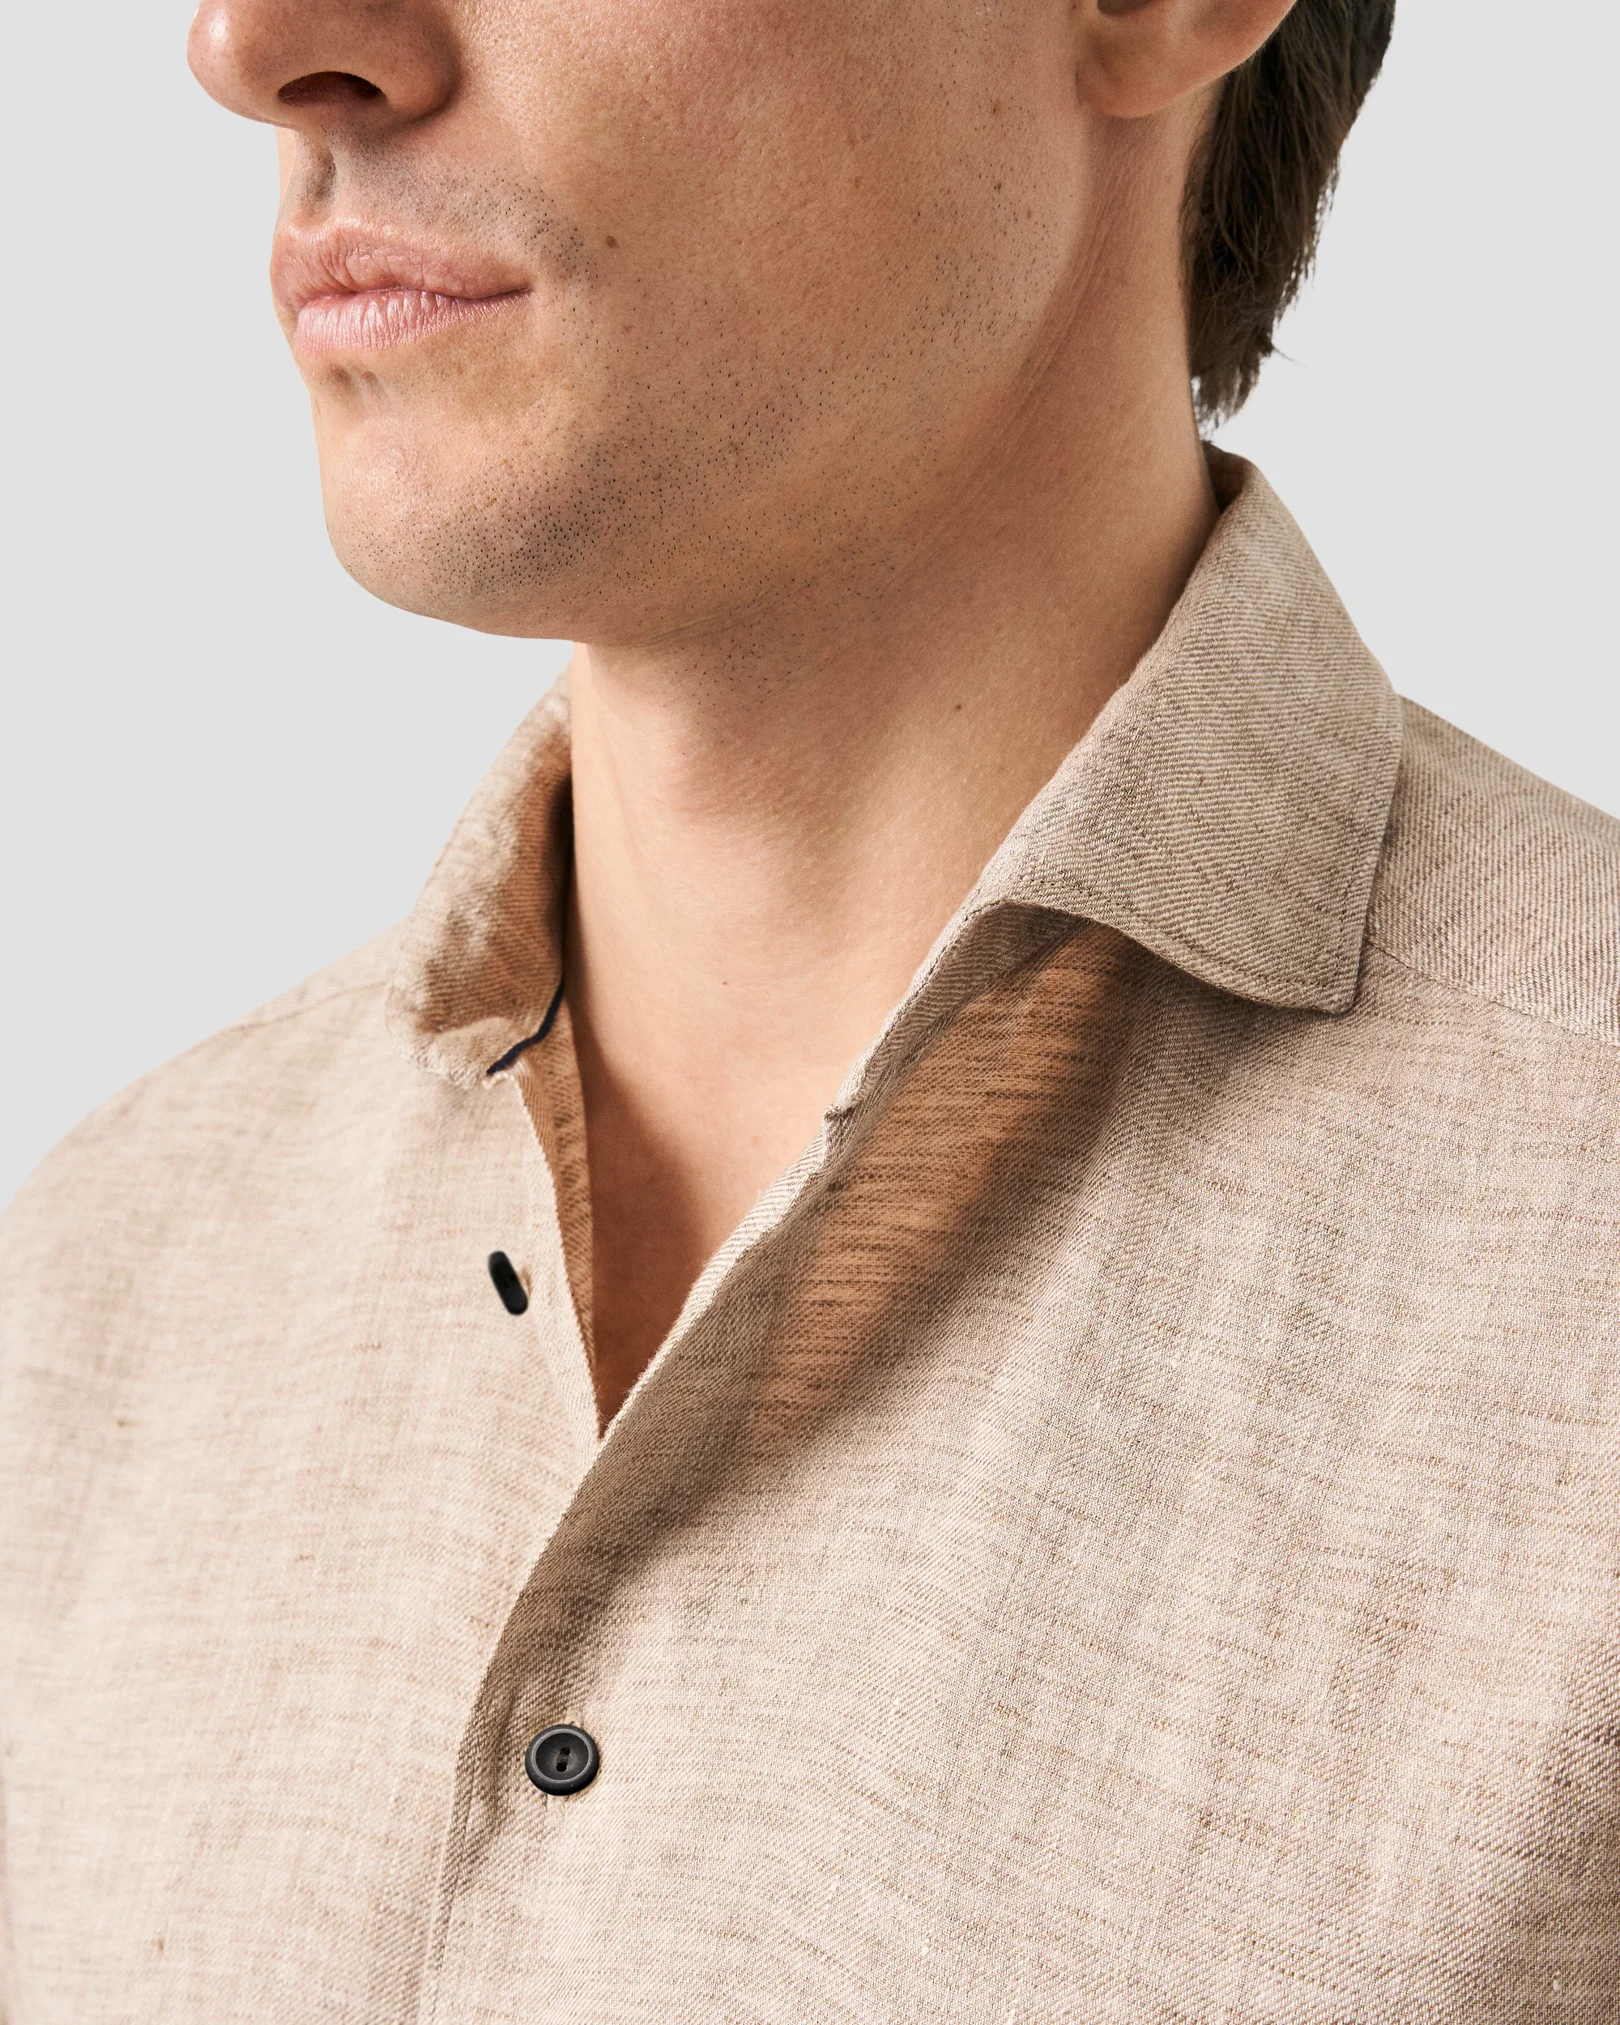 Eton - widespread linen beige shirt